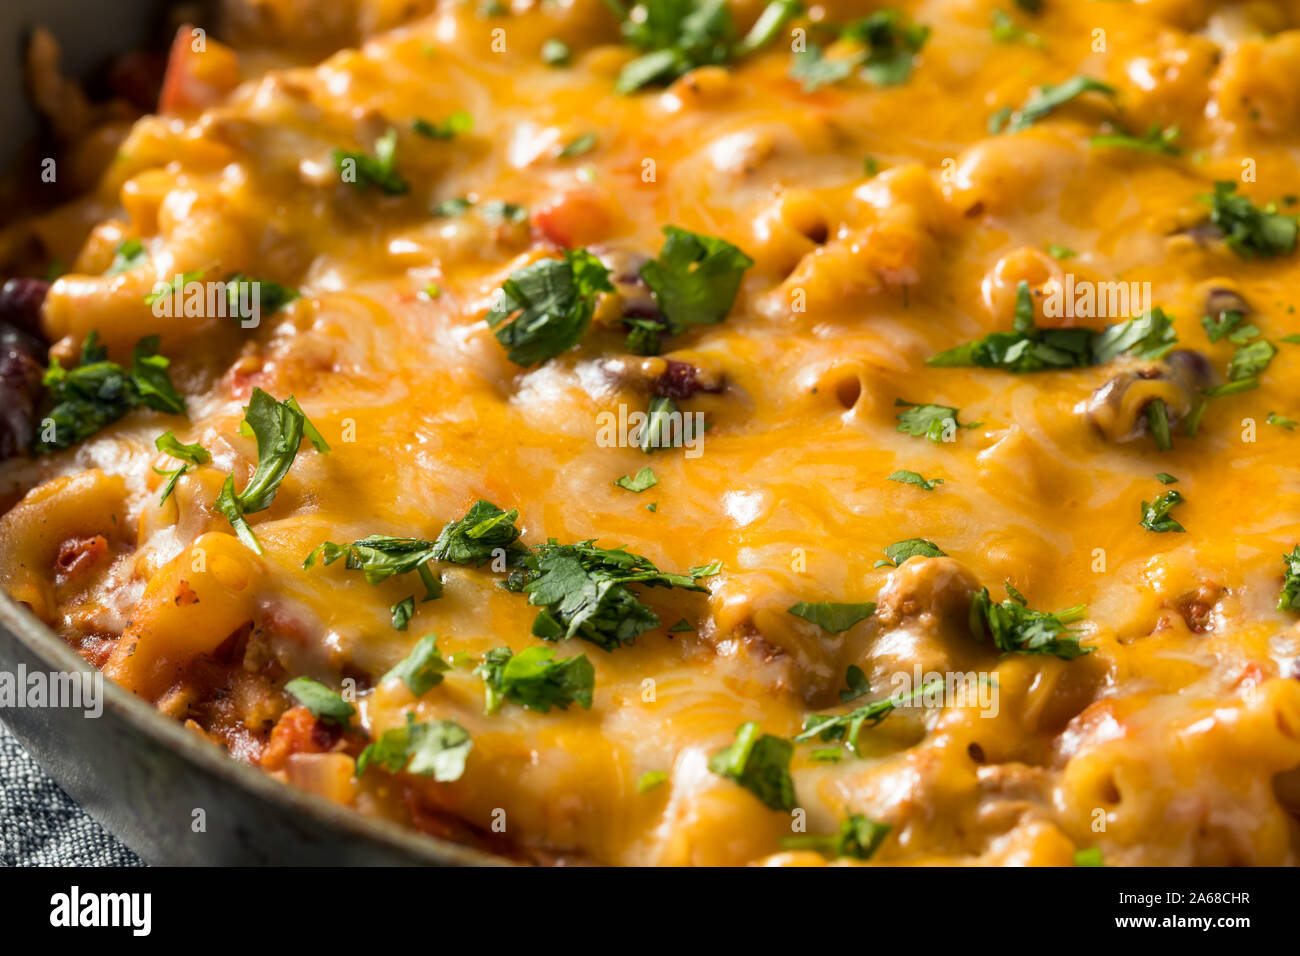 Homemade Chili Mac and Cheese with Cilantro Stock Photo